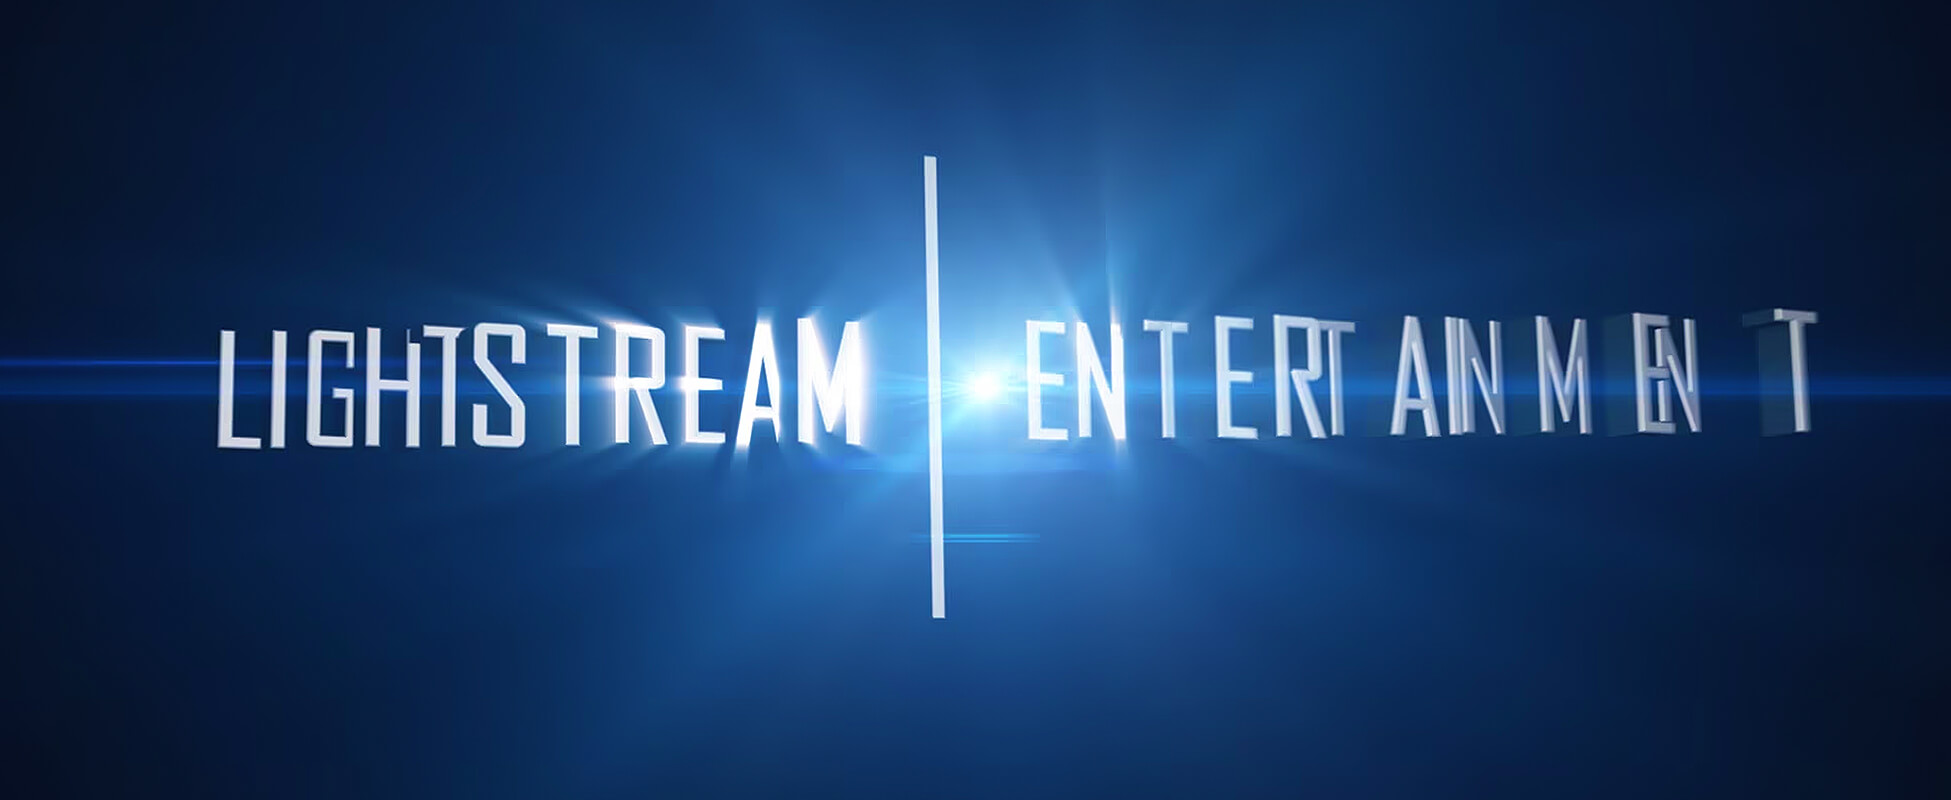 Lightstream Entertainment - Lineage